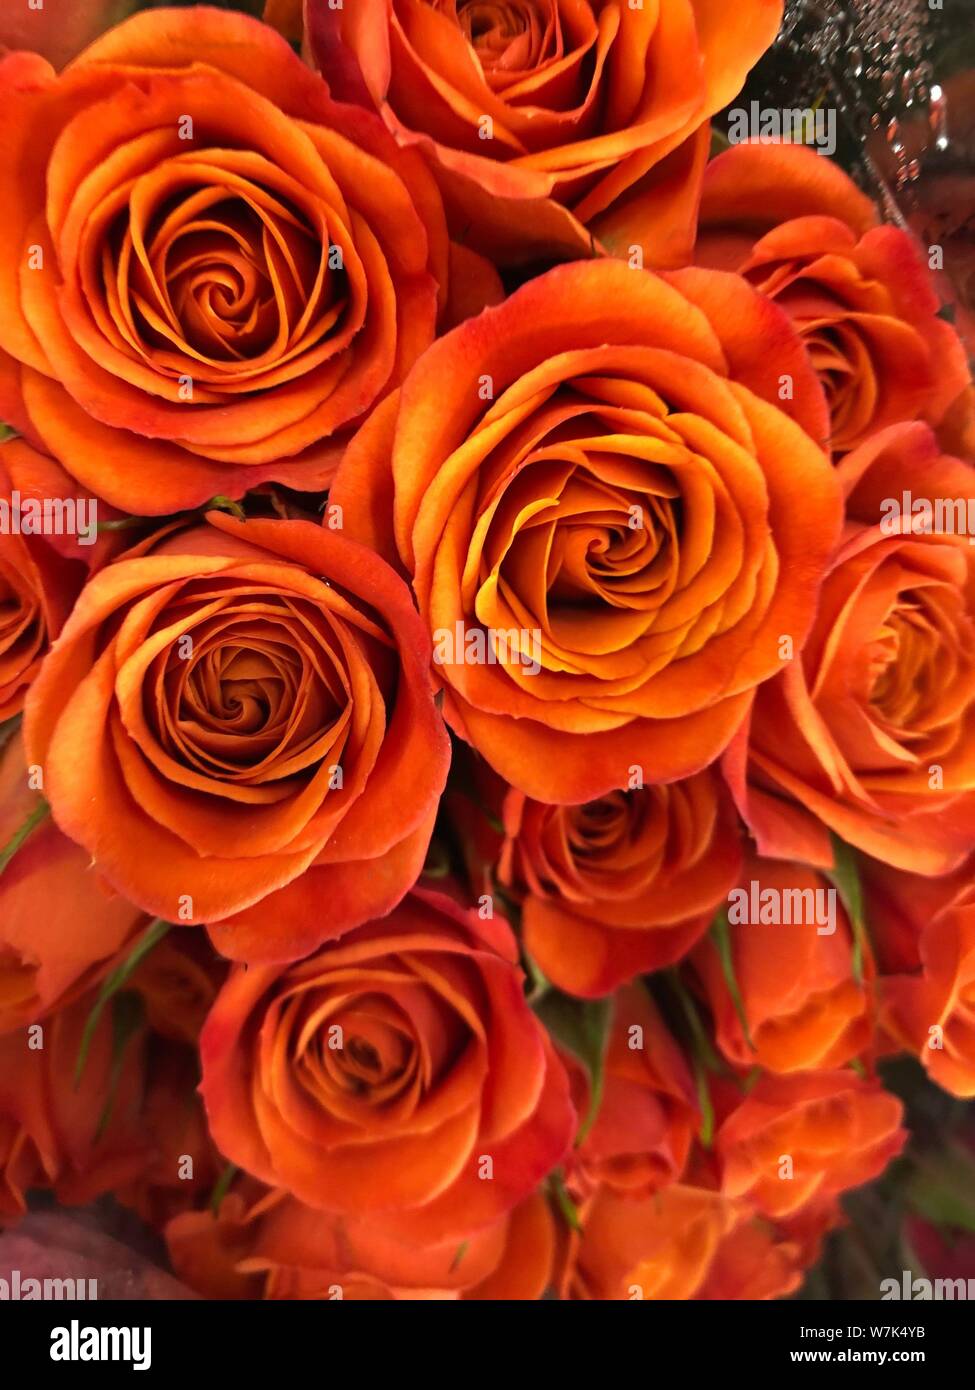 Orange Roses Background Beautiful Flowers Wallpaper Crop Image For Design Stock Photo Alamy,Smoked Ham Rump Portion